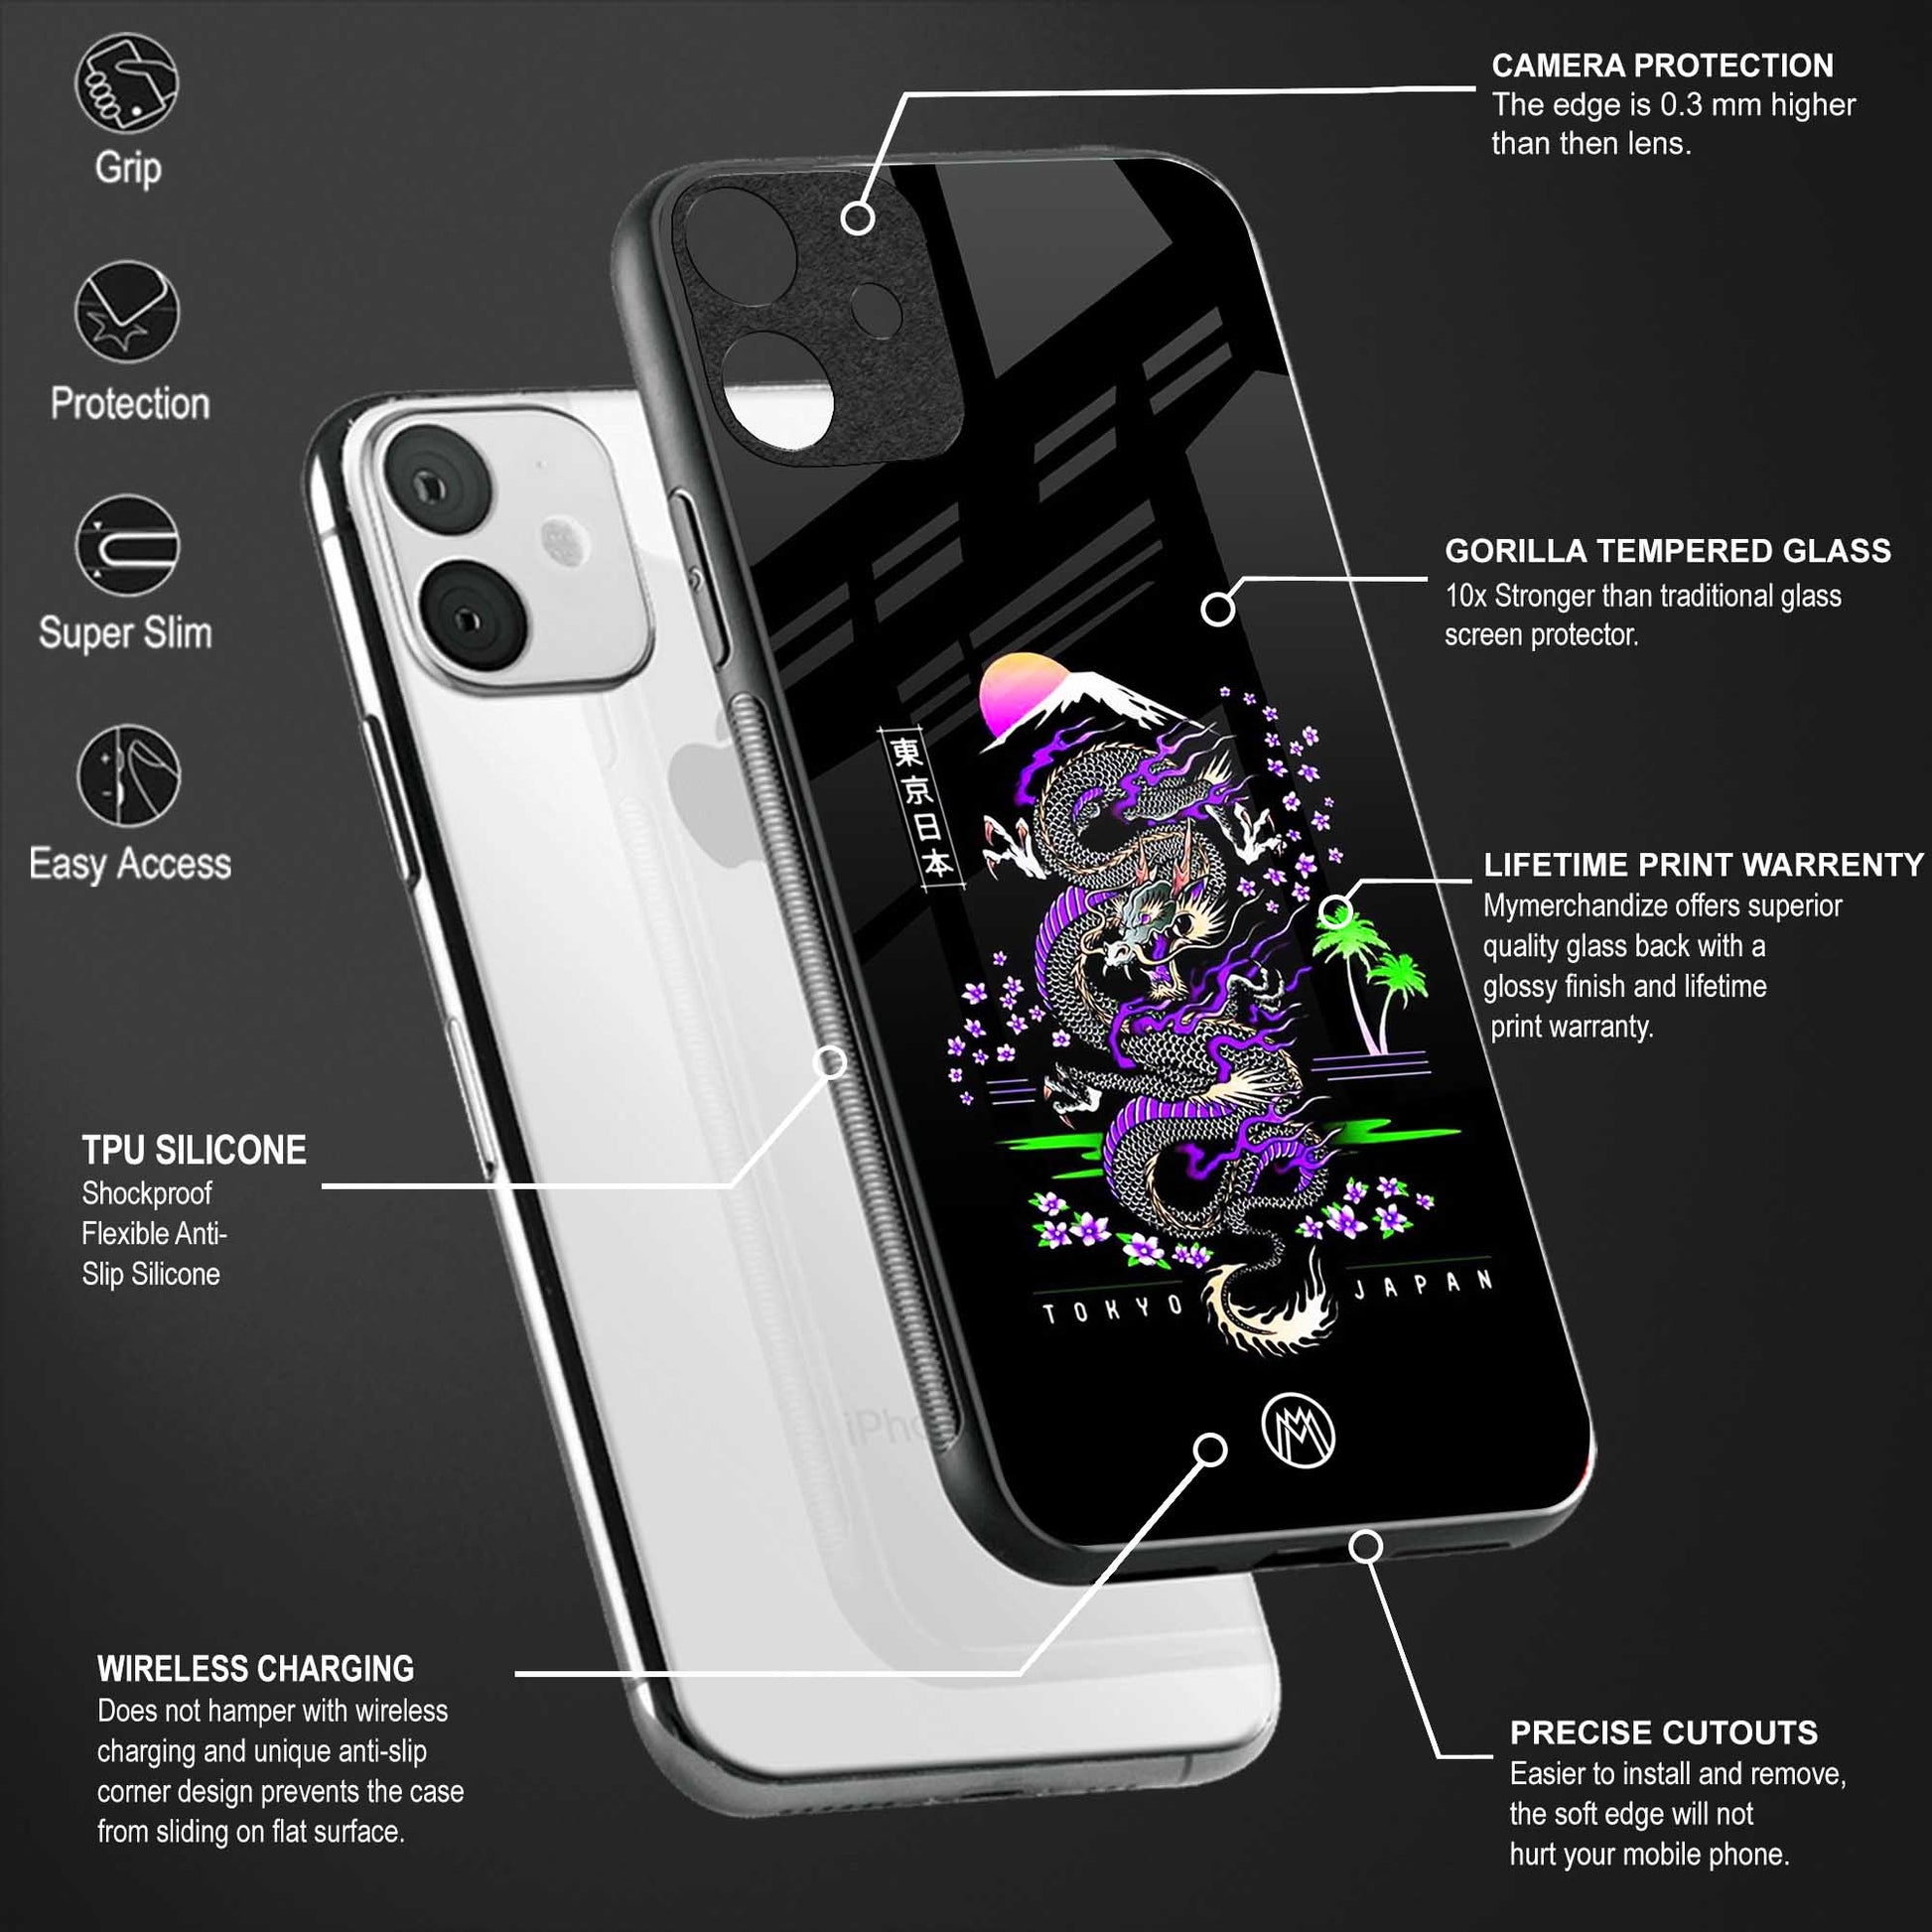 tokyo japan purple dragon black back phone cover | glass case for vivo y22